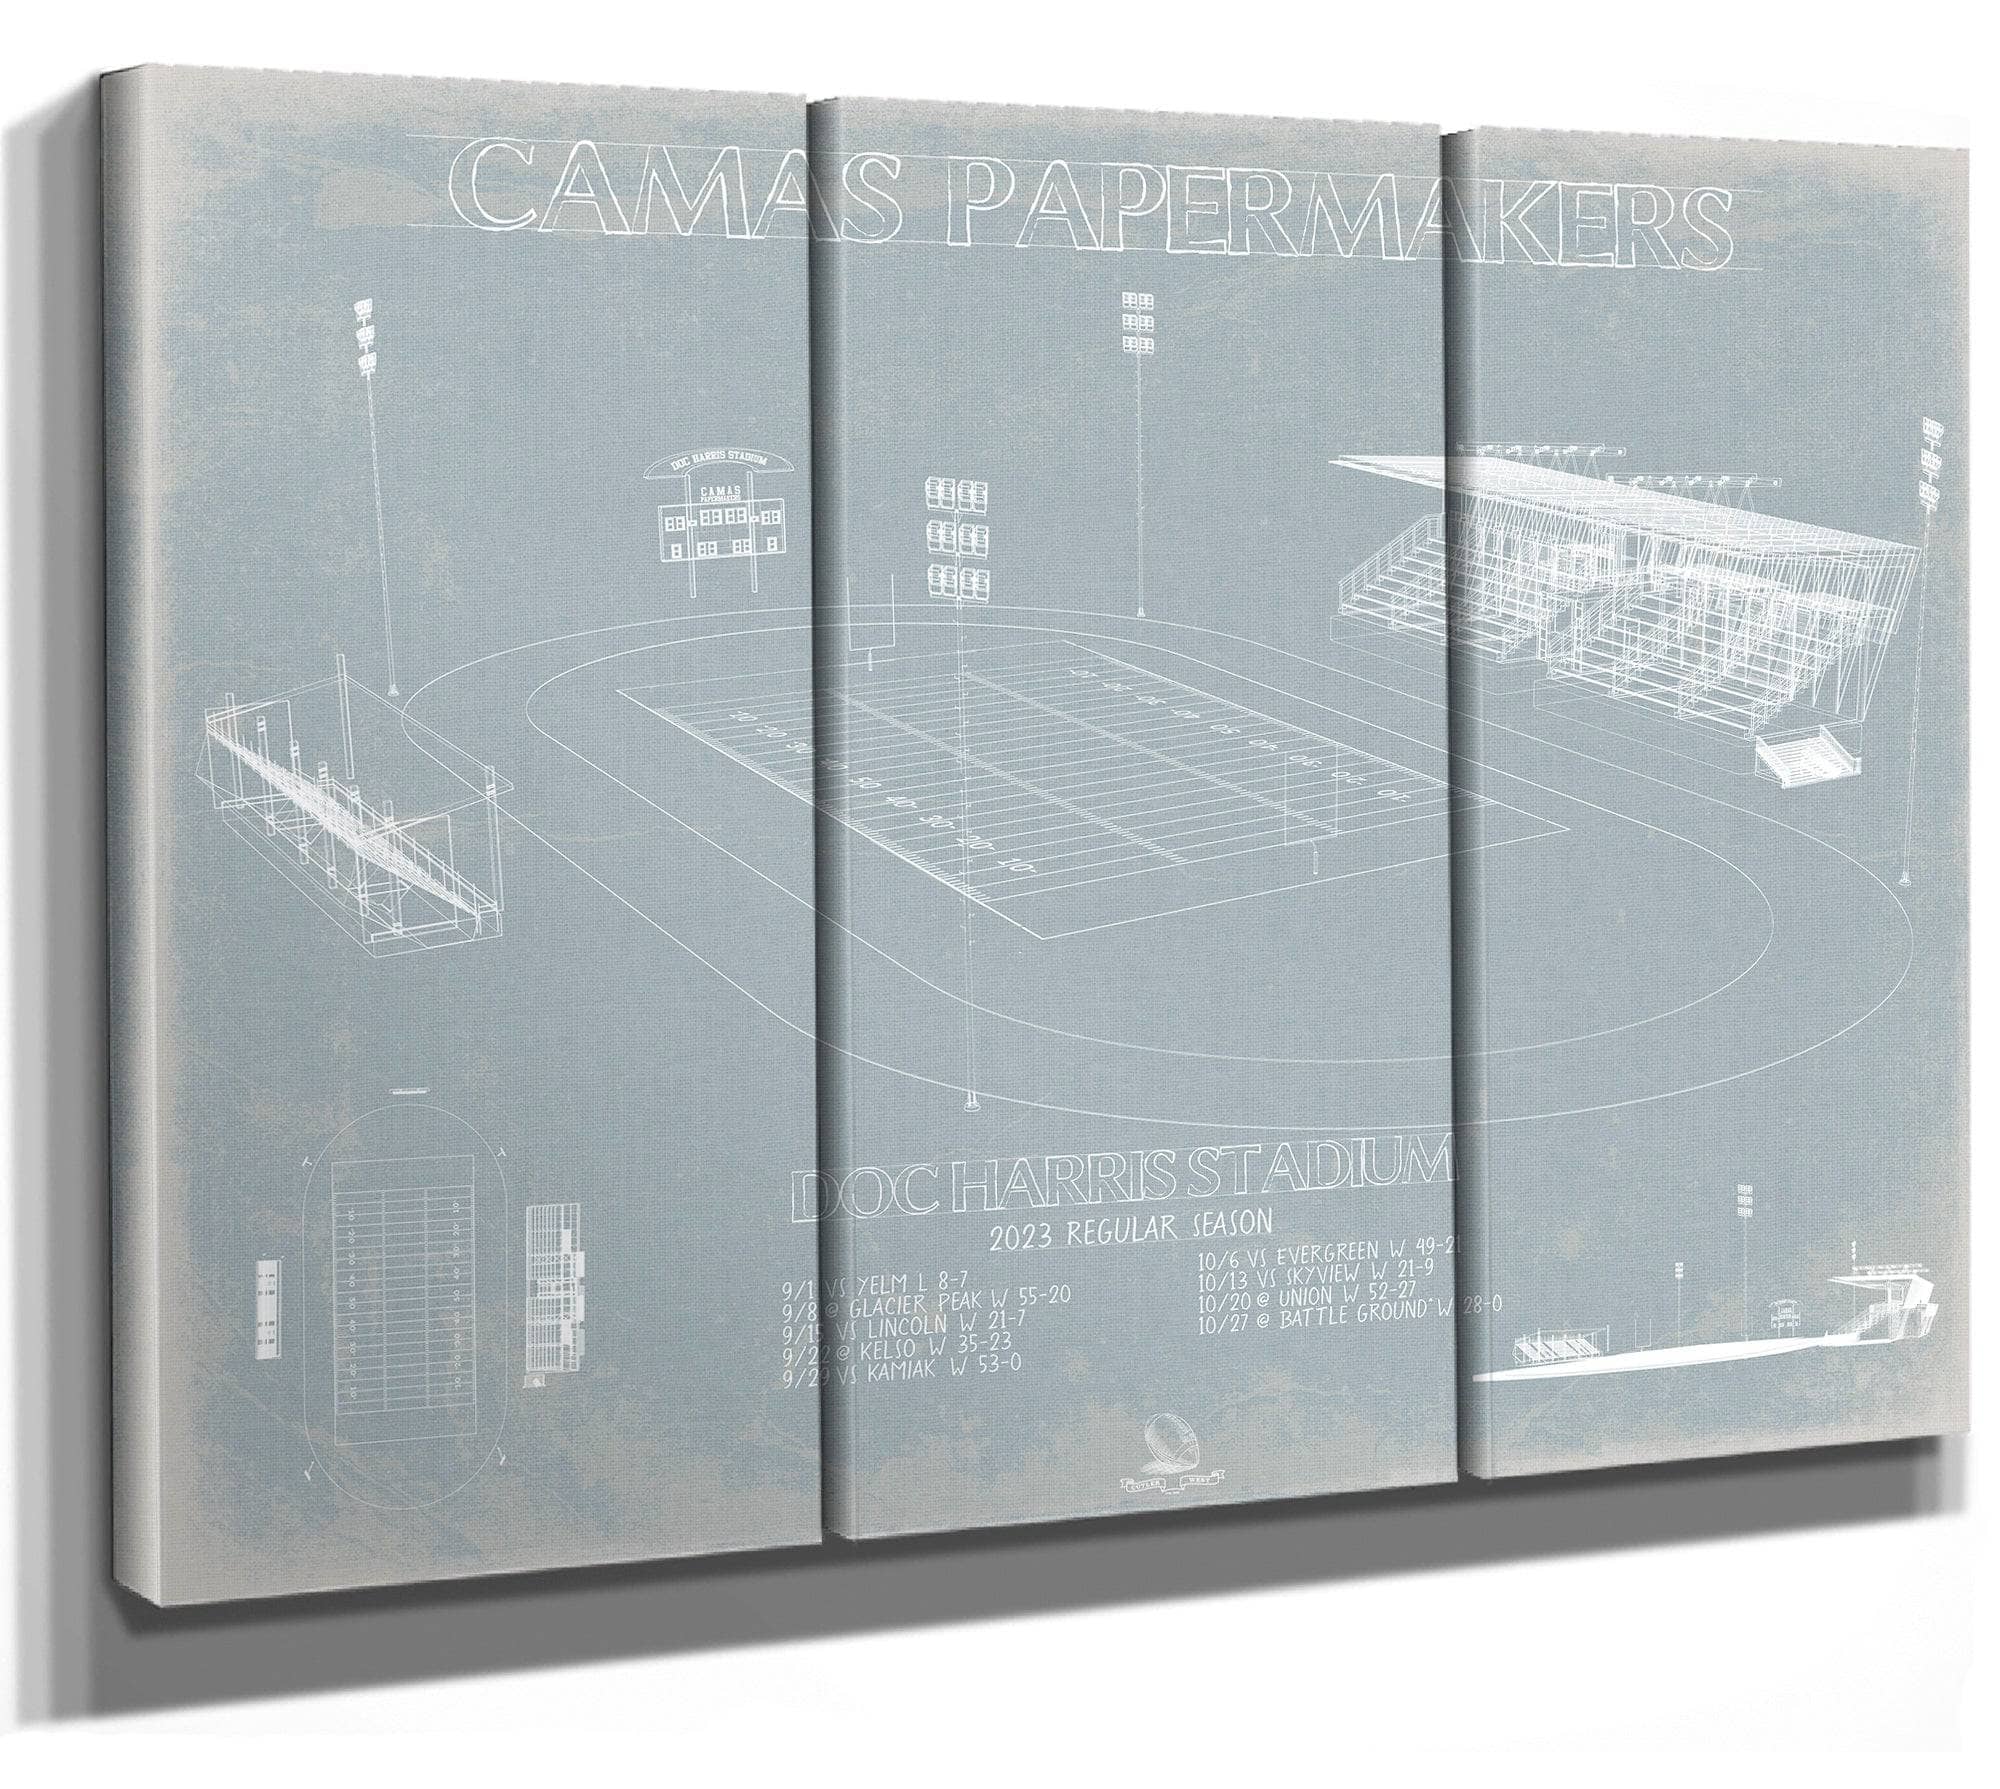 Doc Harris Stadium Blueprint - Camas Papermakers Fan